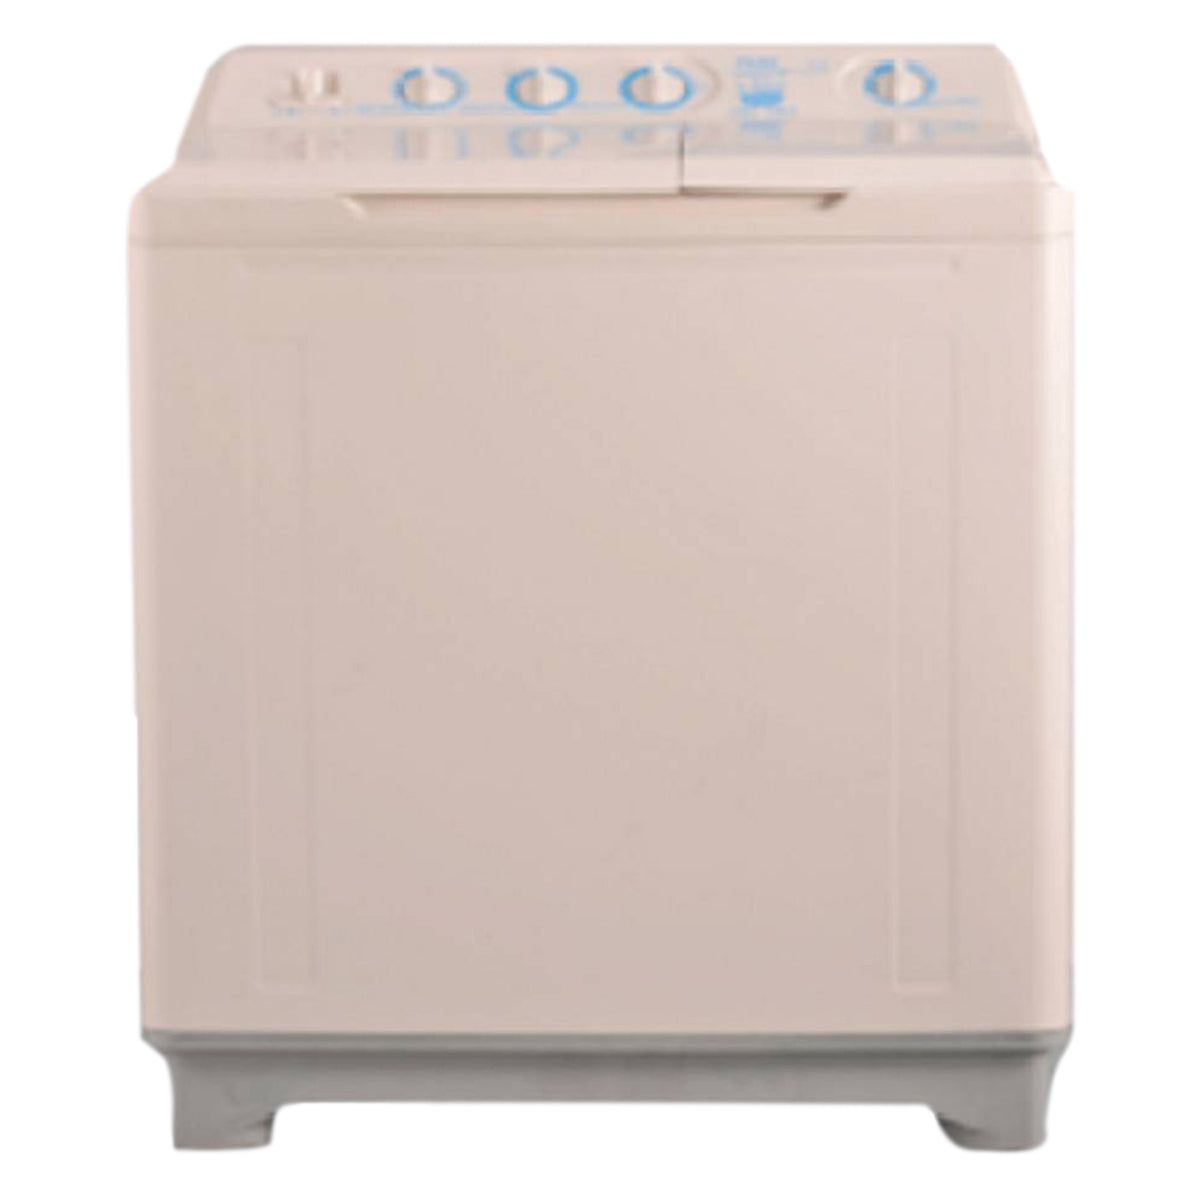 Haier Washing Machine HWM 120AS 12-KG Twin Tub with Spinner 100% Copper Brand Warranty